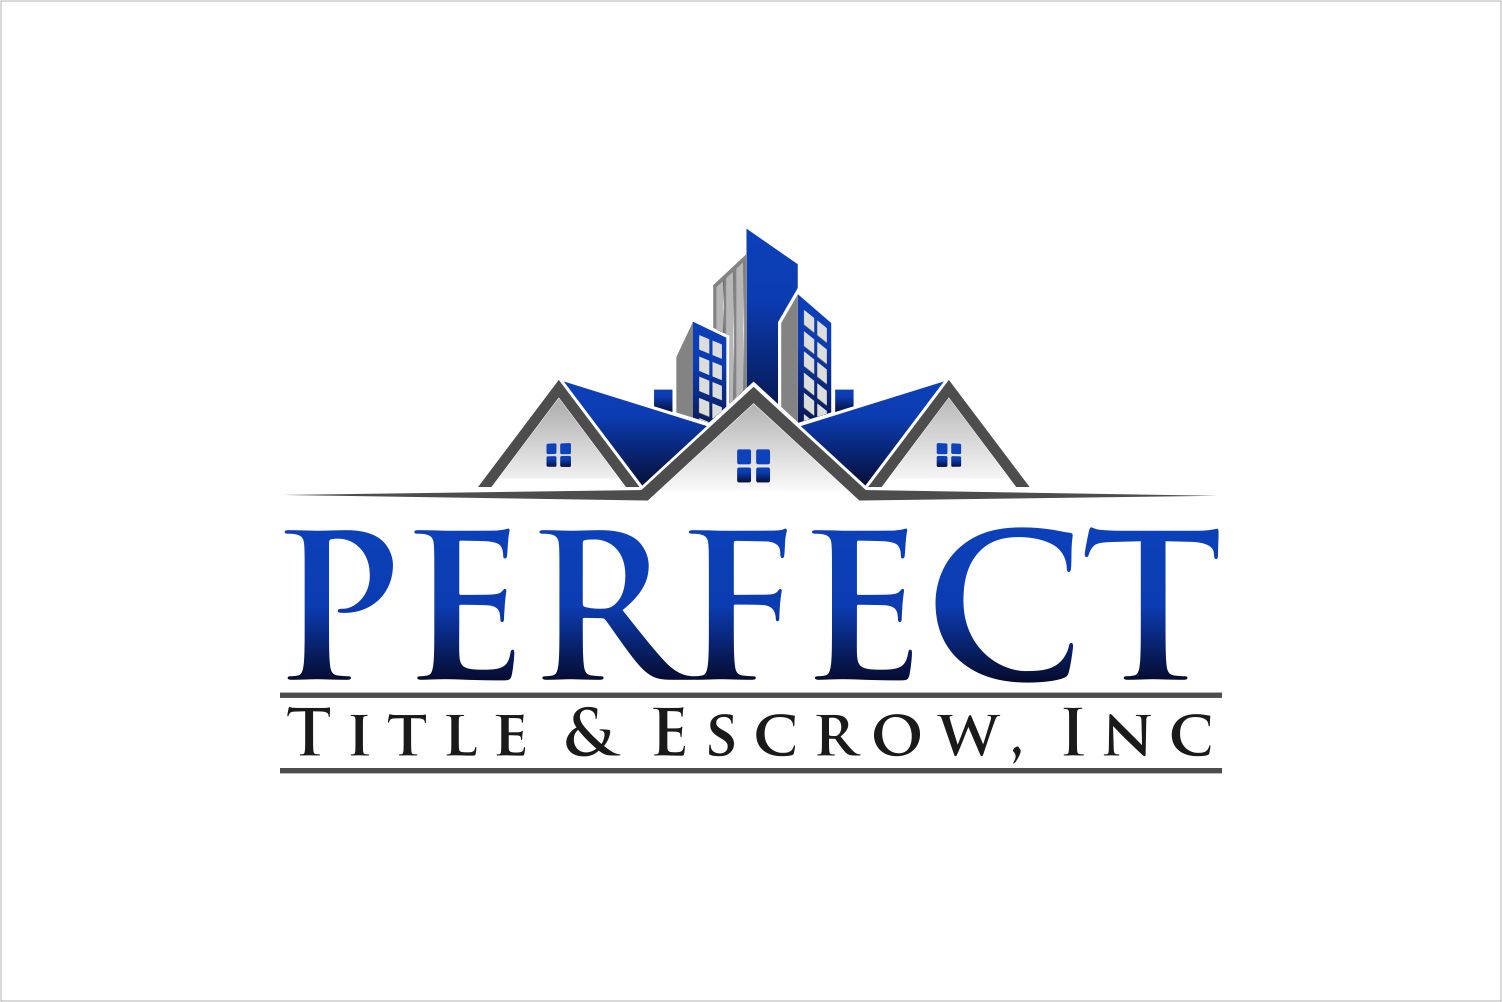 Perfect Title & Escrow, Inc